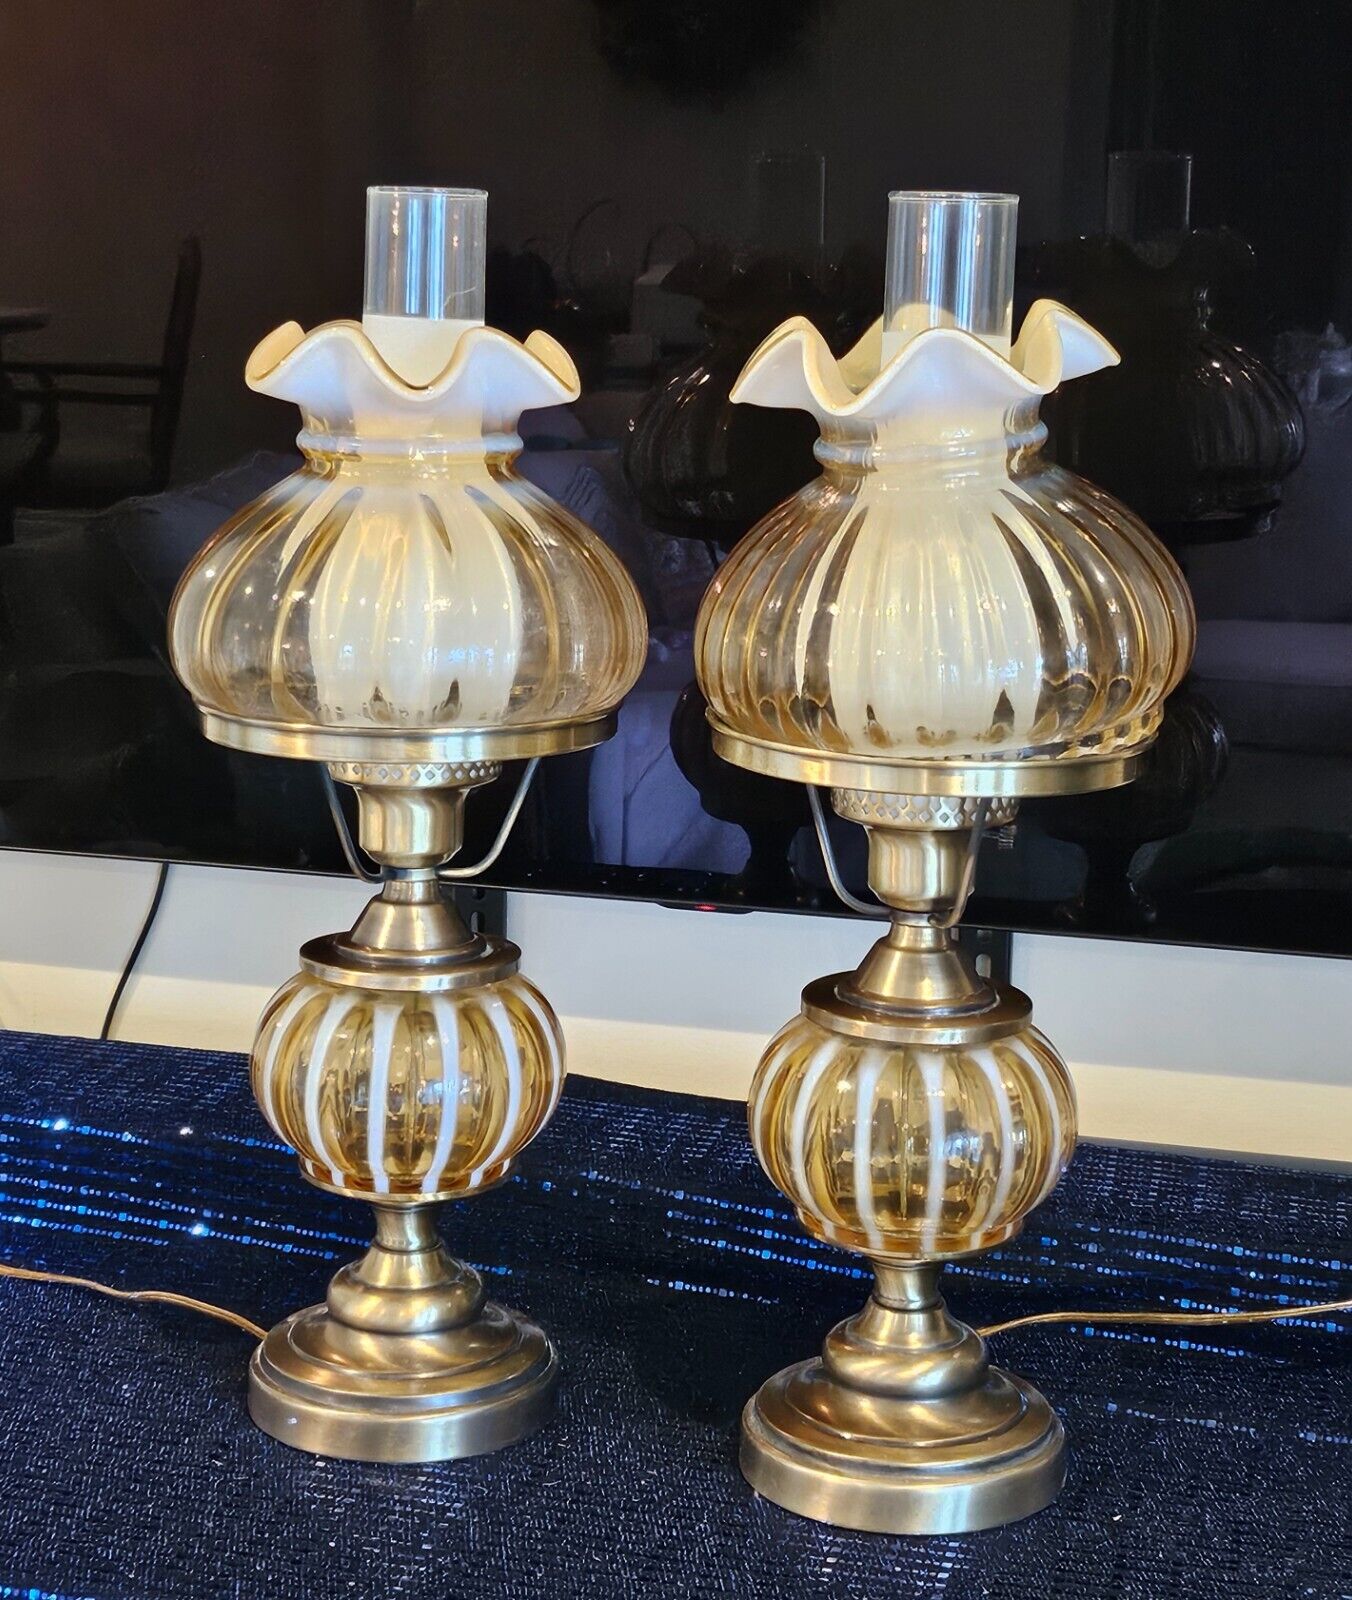 Rare Fenton glass lamps in beautiful caramel stripe